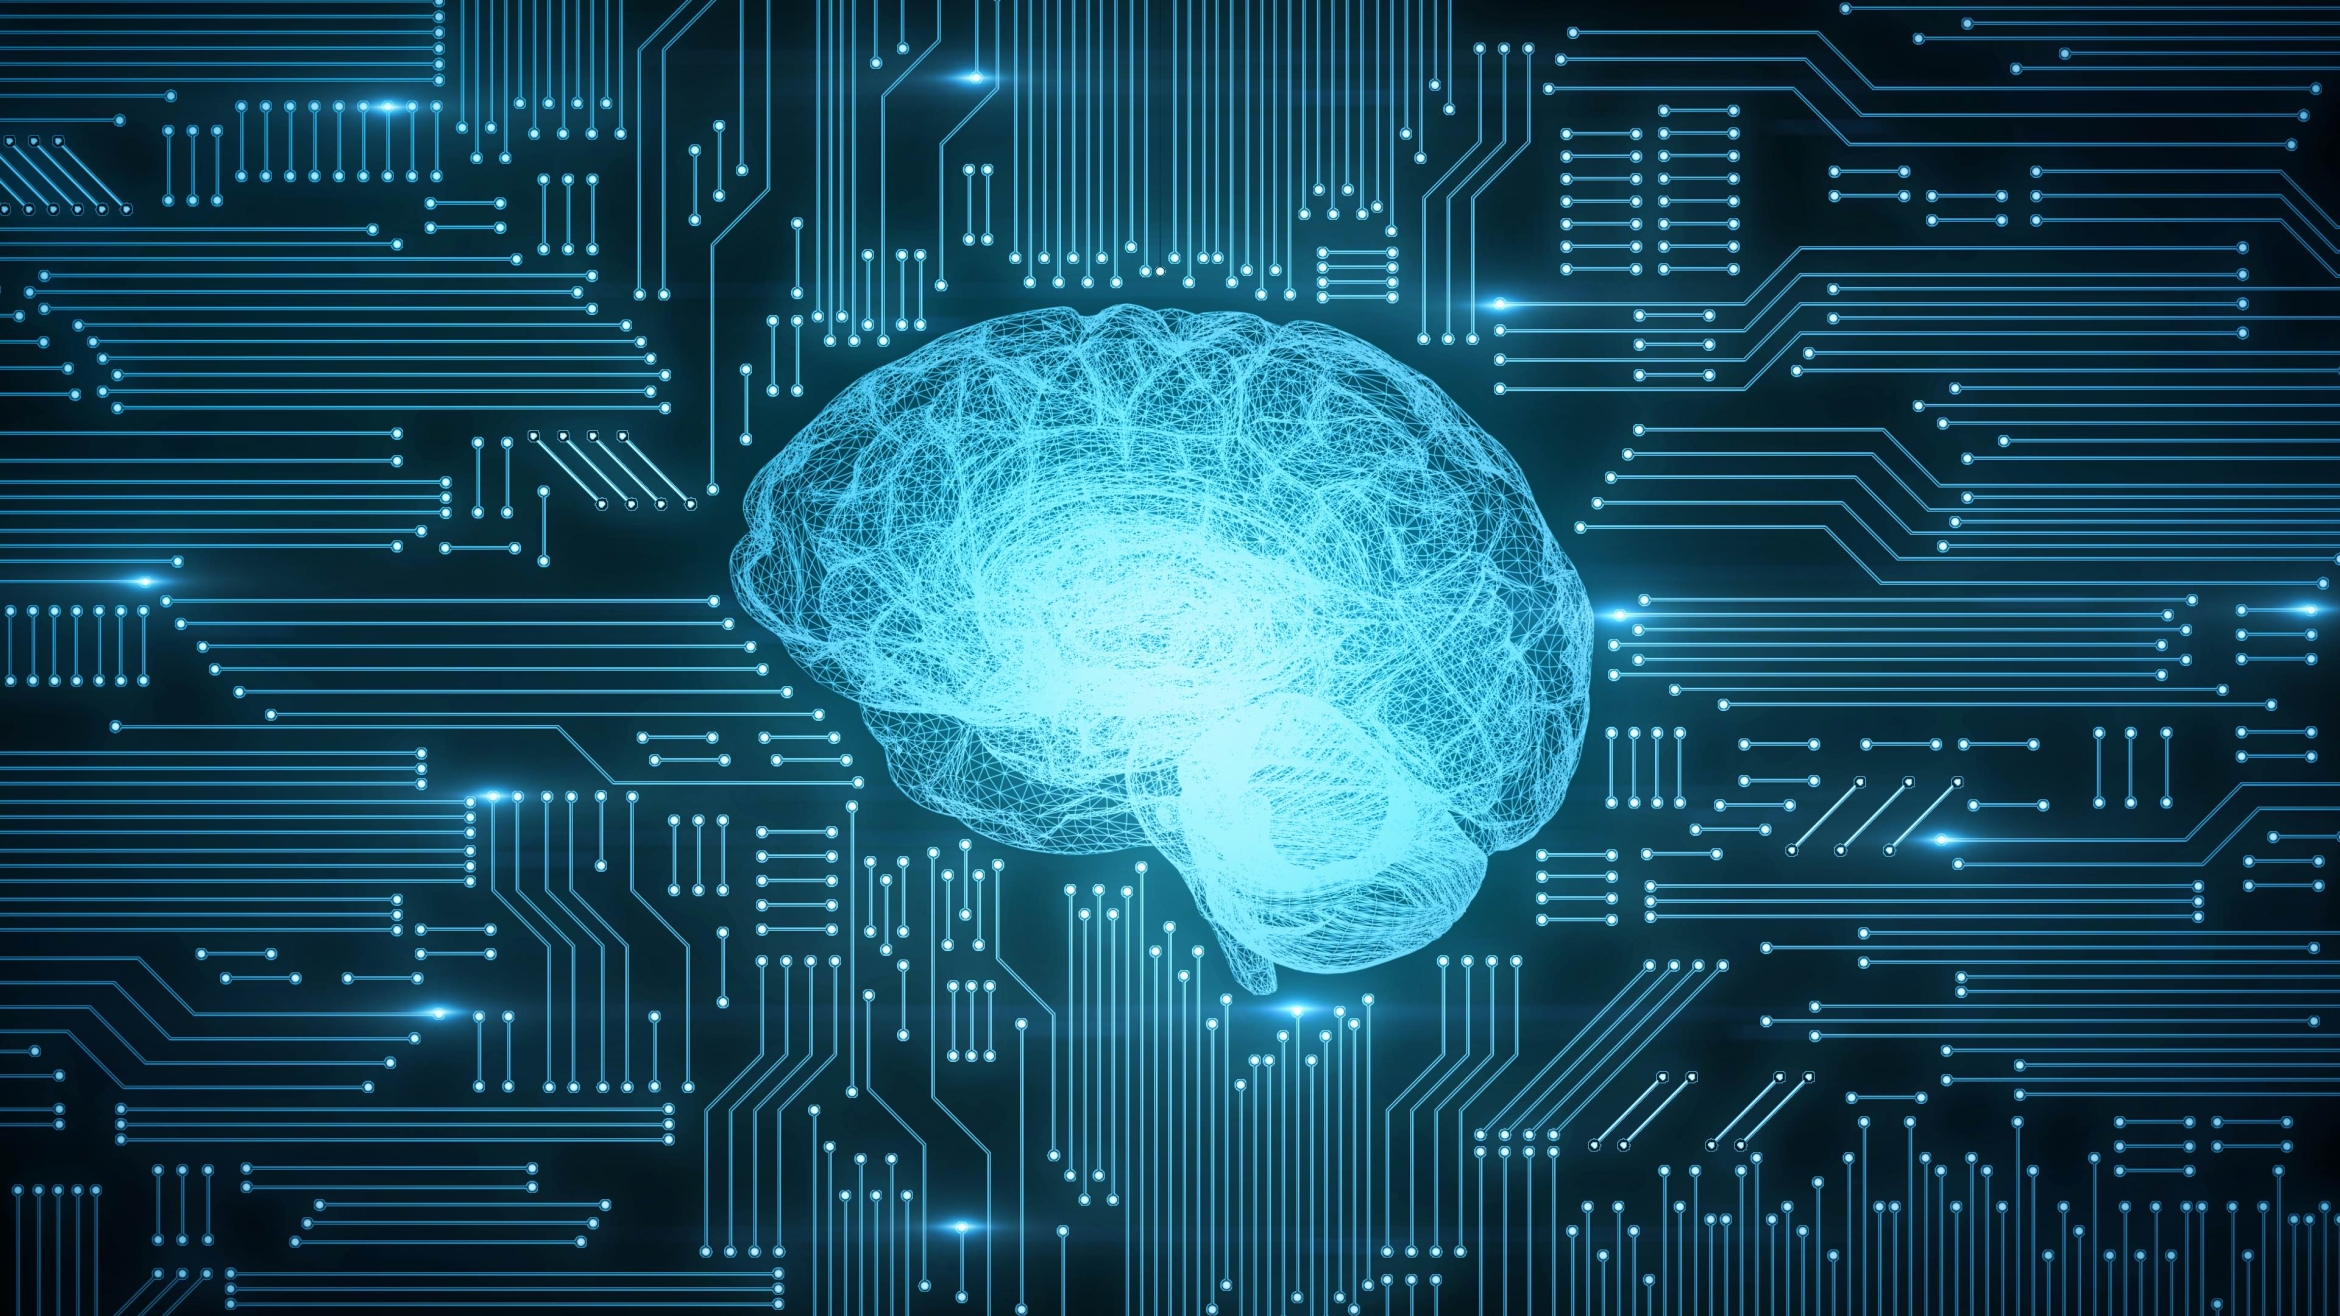 concept illustration of brain-inspired computing hardware